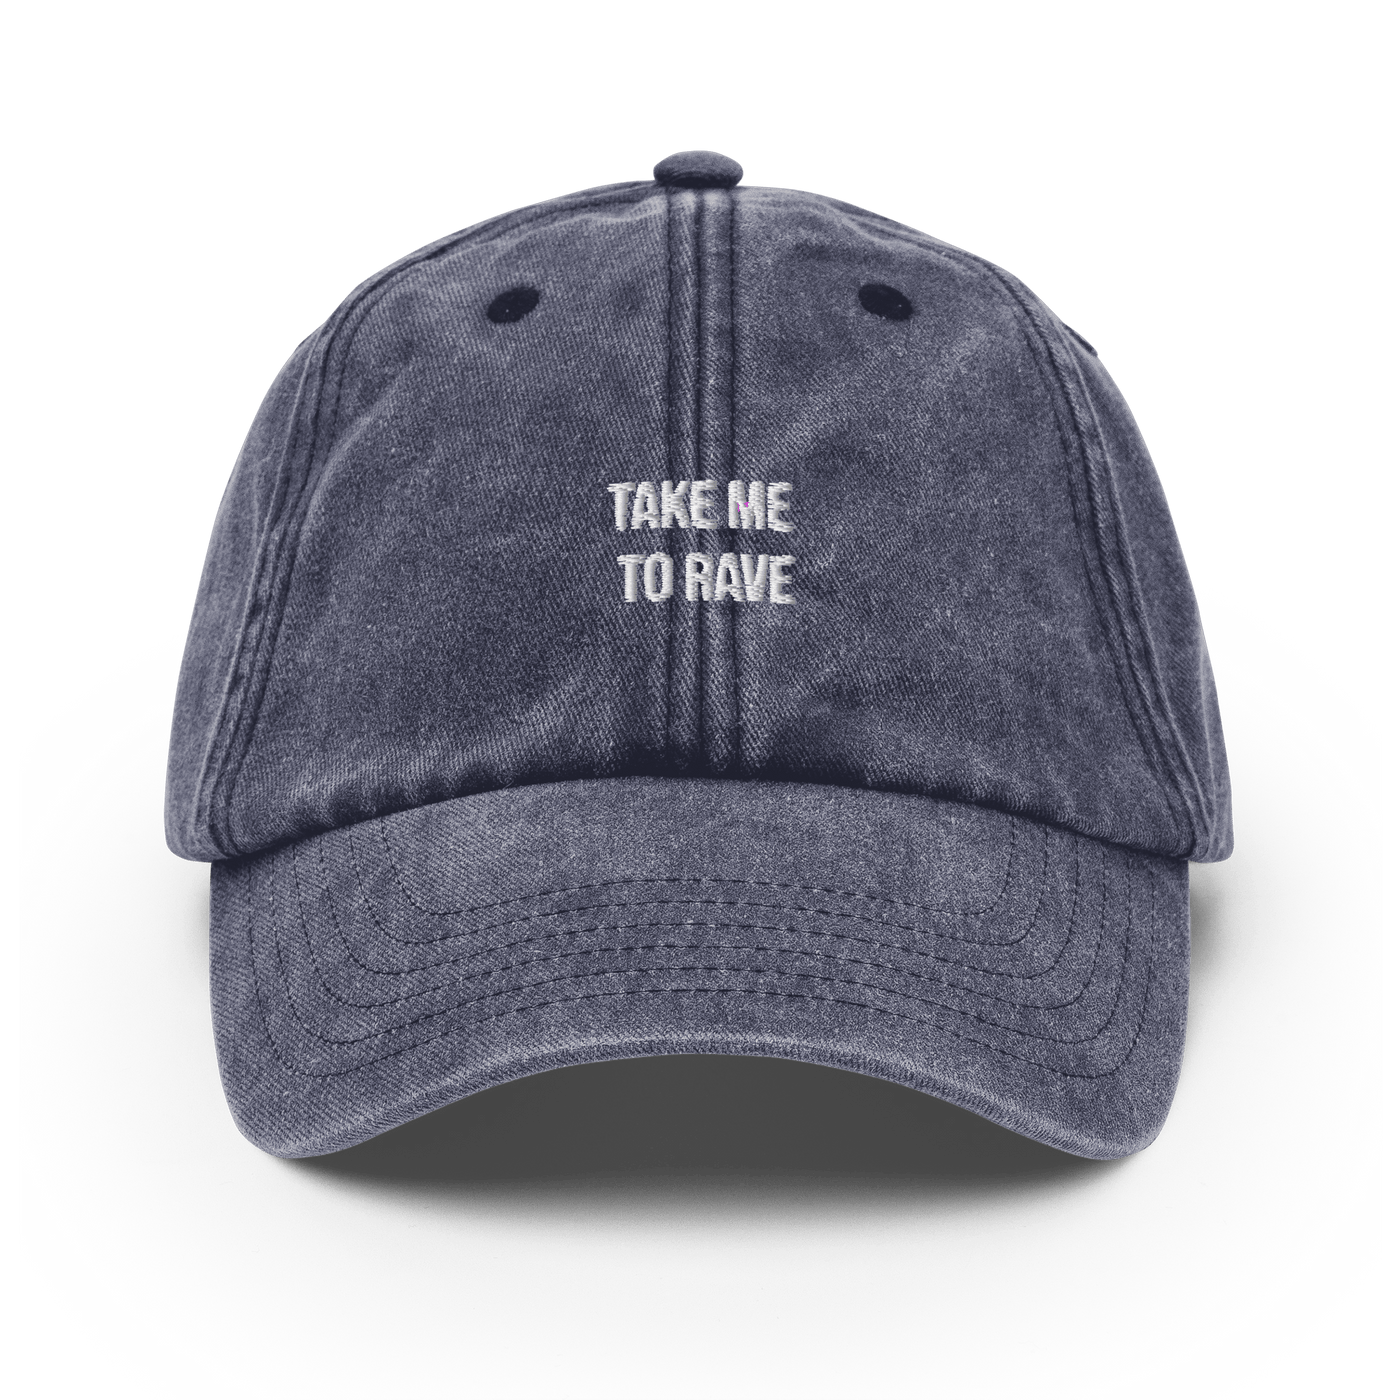 Take me to rave Vintage Hat - Vintage Denim - - Just Another Cap Store